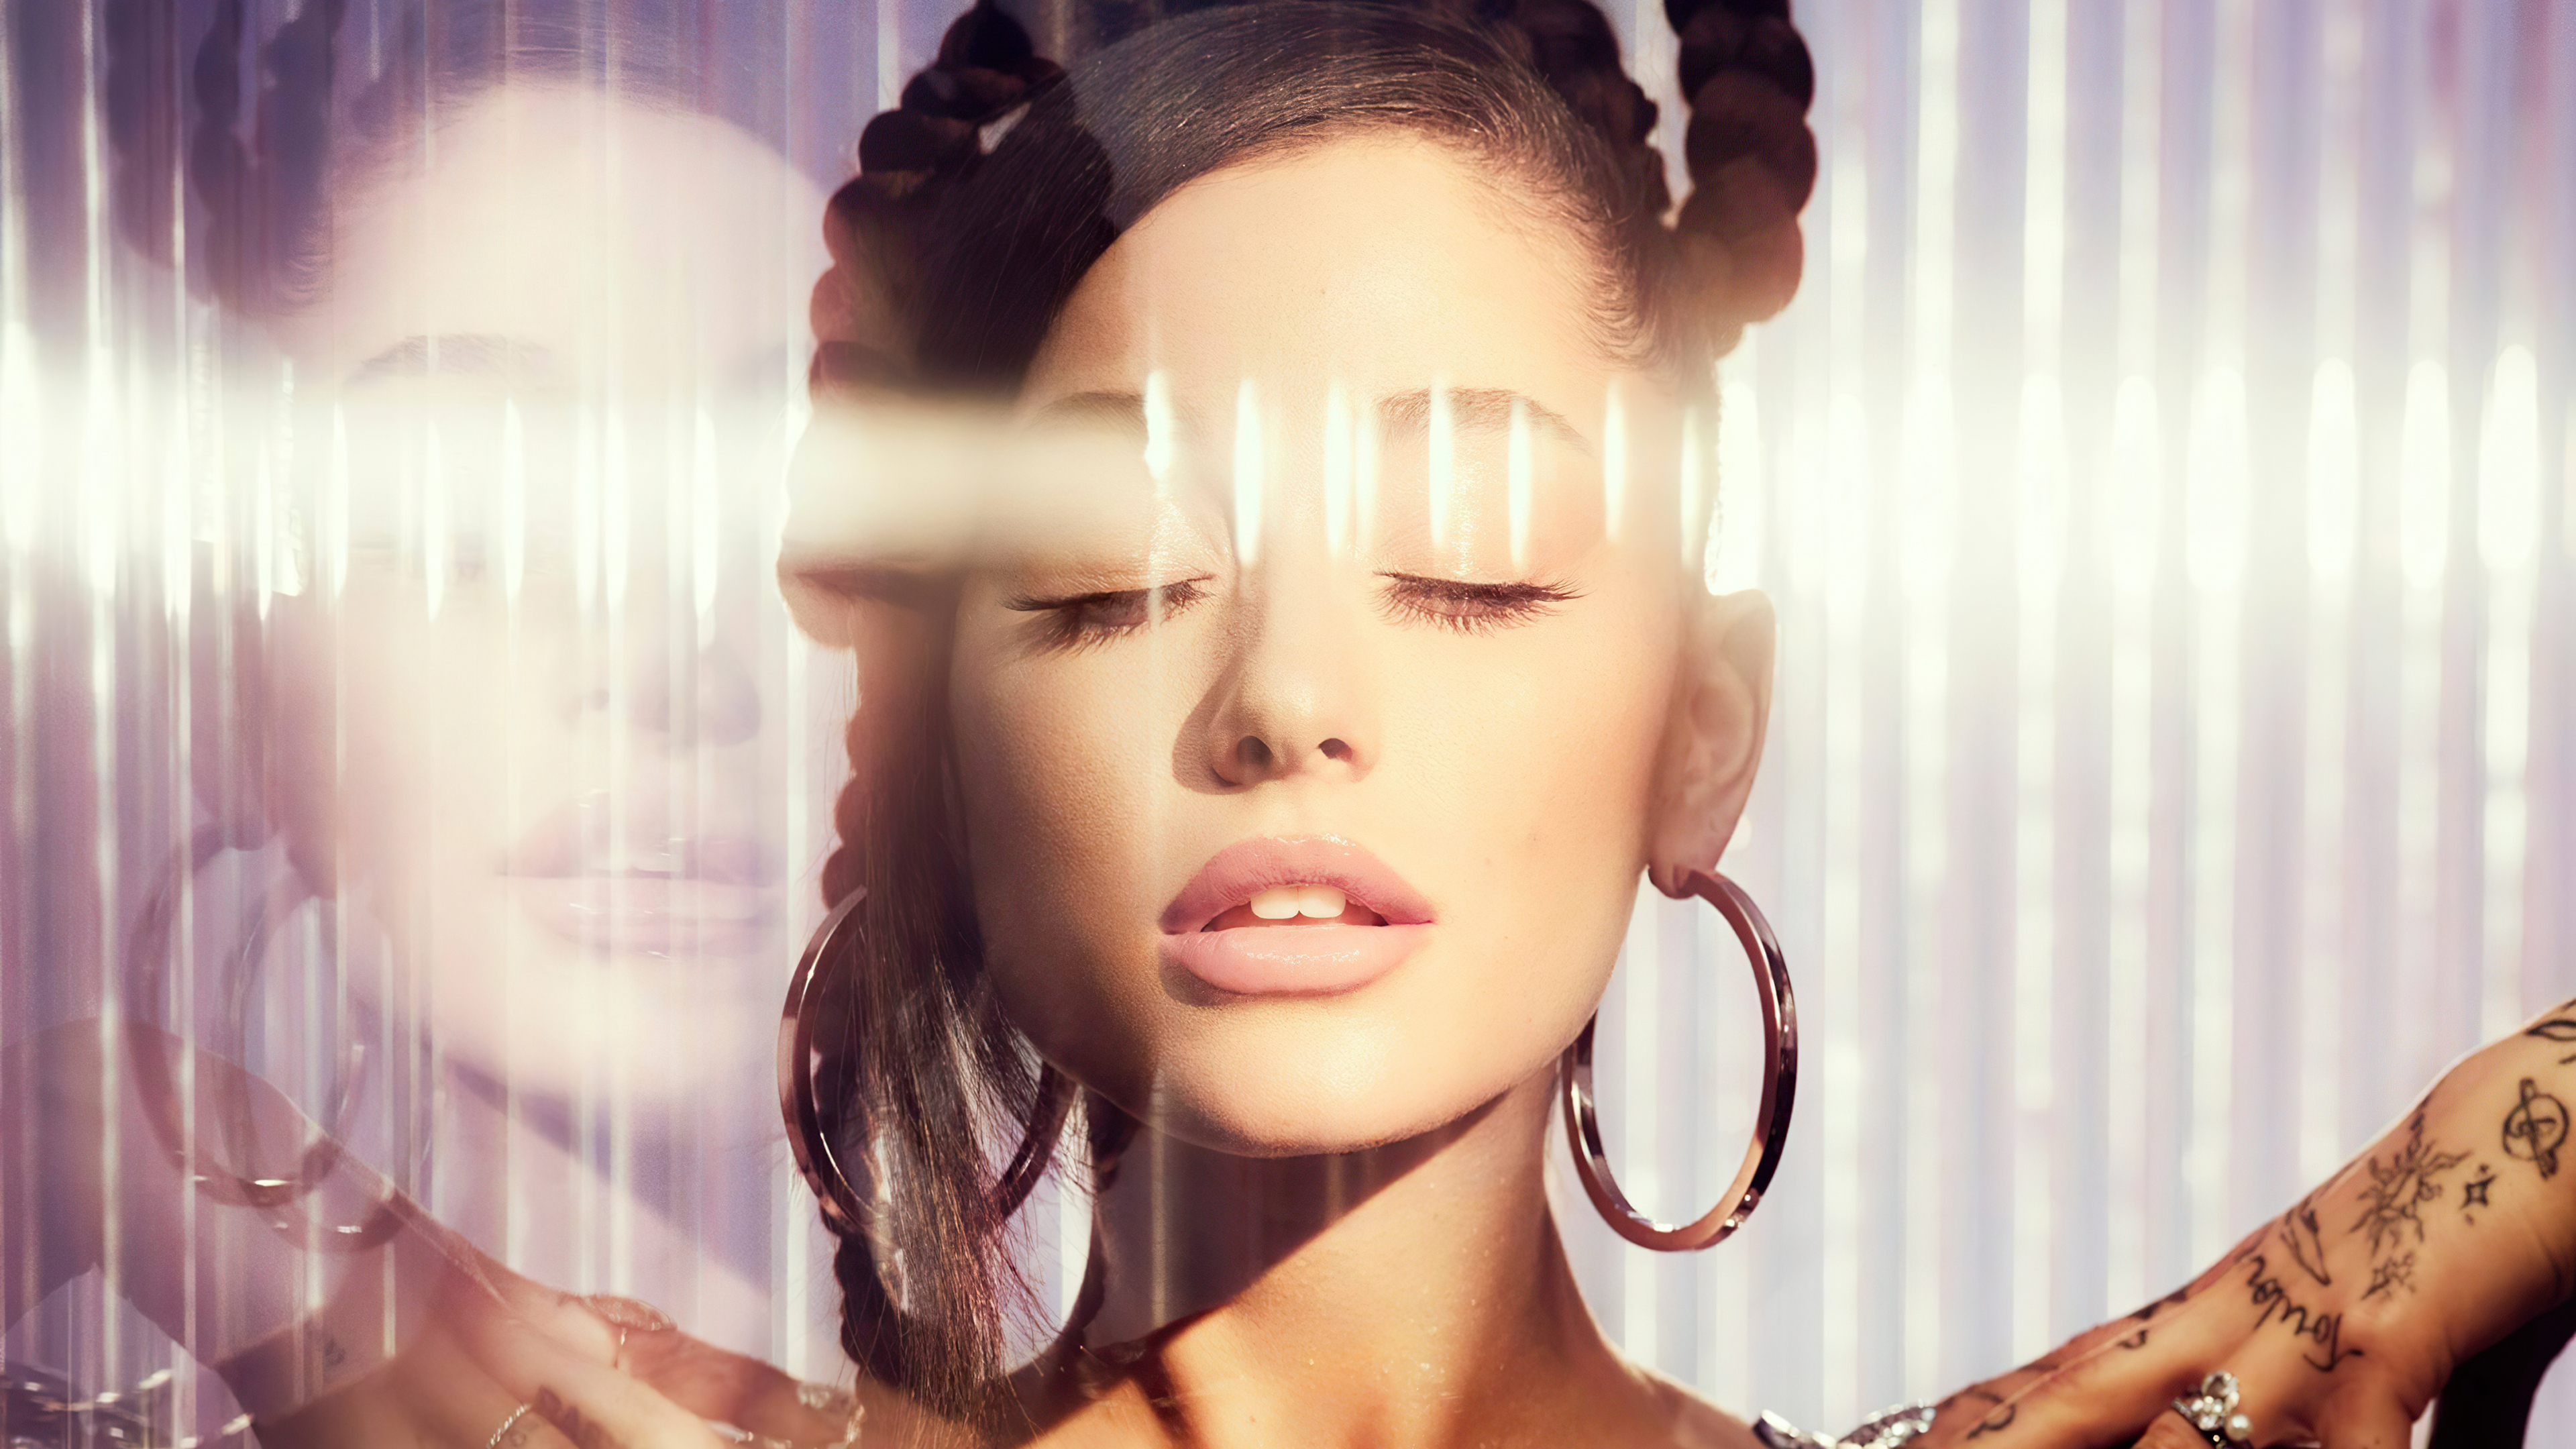 Ariana Grande Allure Magazine, HD Music, 4k Wallpaper, Image, Background, Photo and Picture